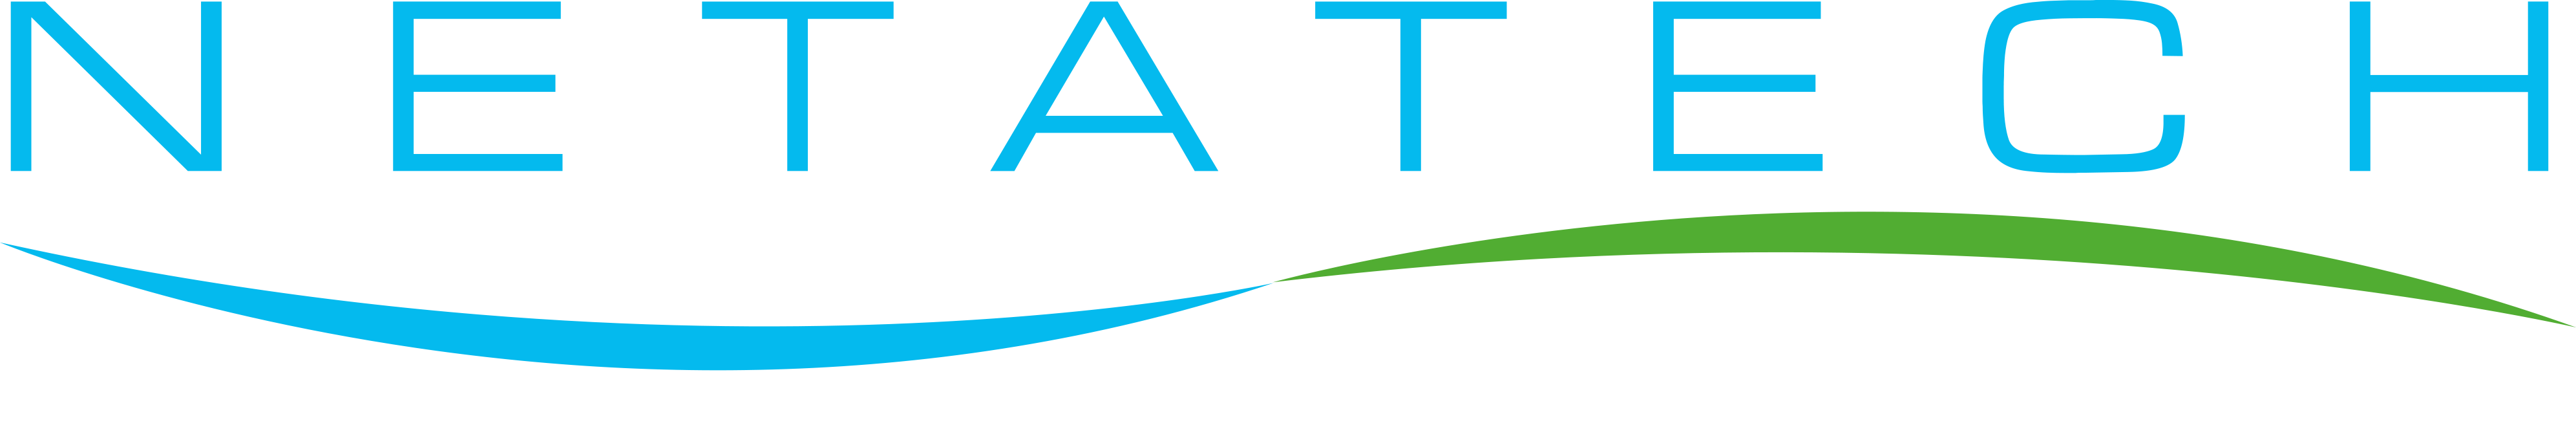 Netatech Engineering Pte. Ltd. logo